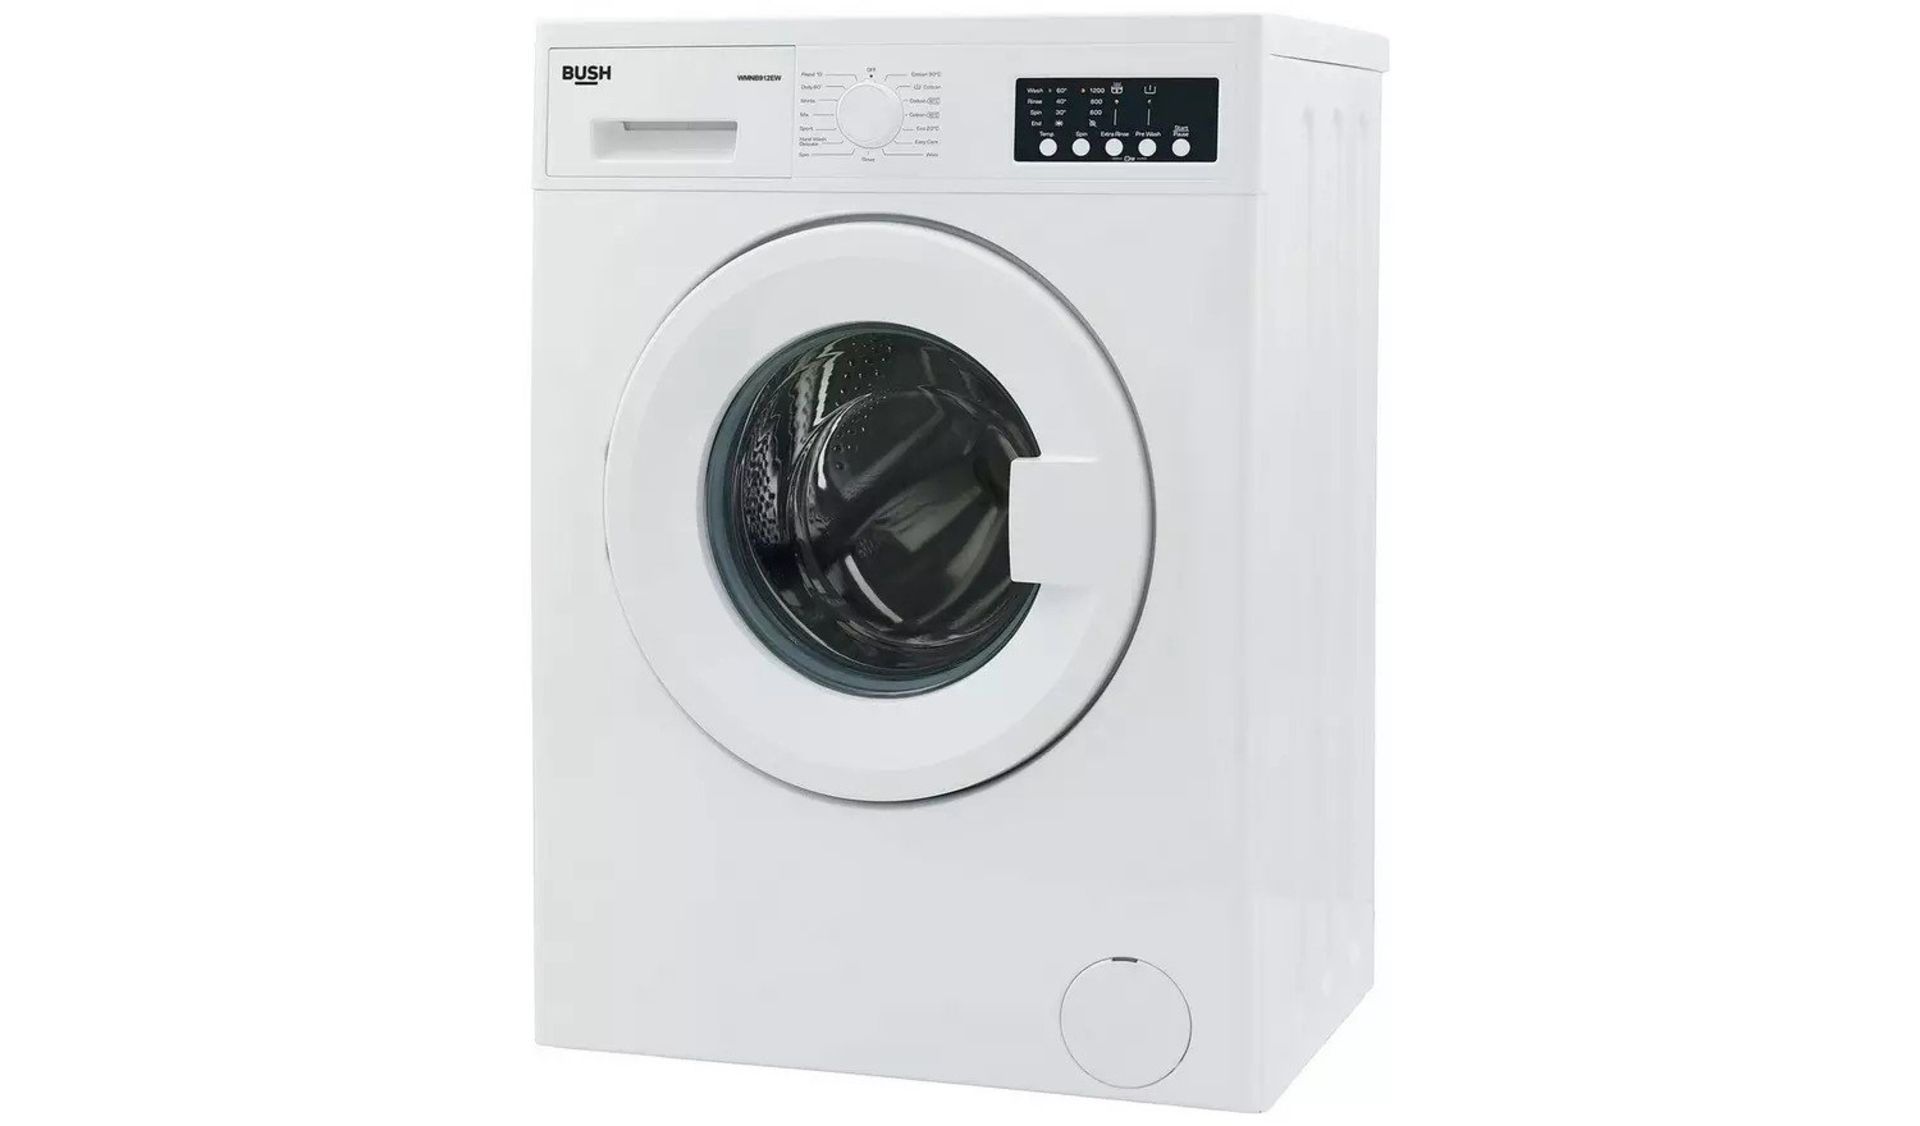 Bush WMNB812EW 8KG 1200 Spin Washing Machine - White - ARGOS RRP £209.99 - Image 2 of 4